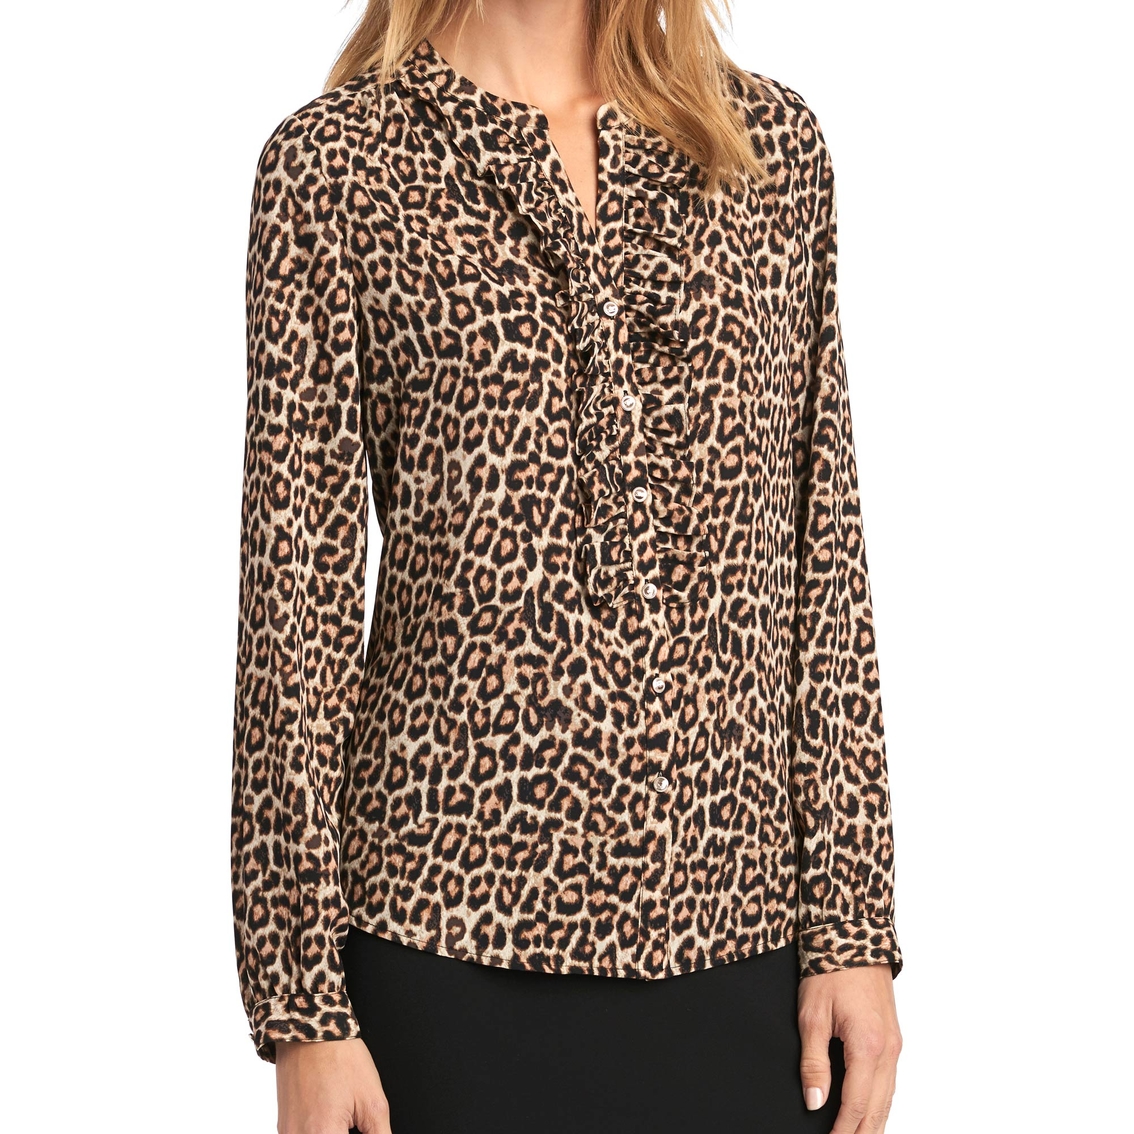 Karl Lagerfeld Paris Cheetah Ruffle Blouse | Tops | Clothing ...